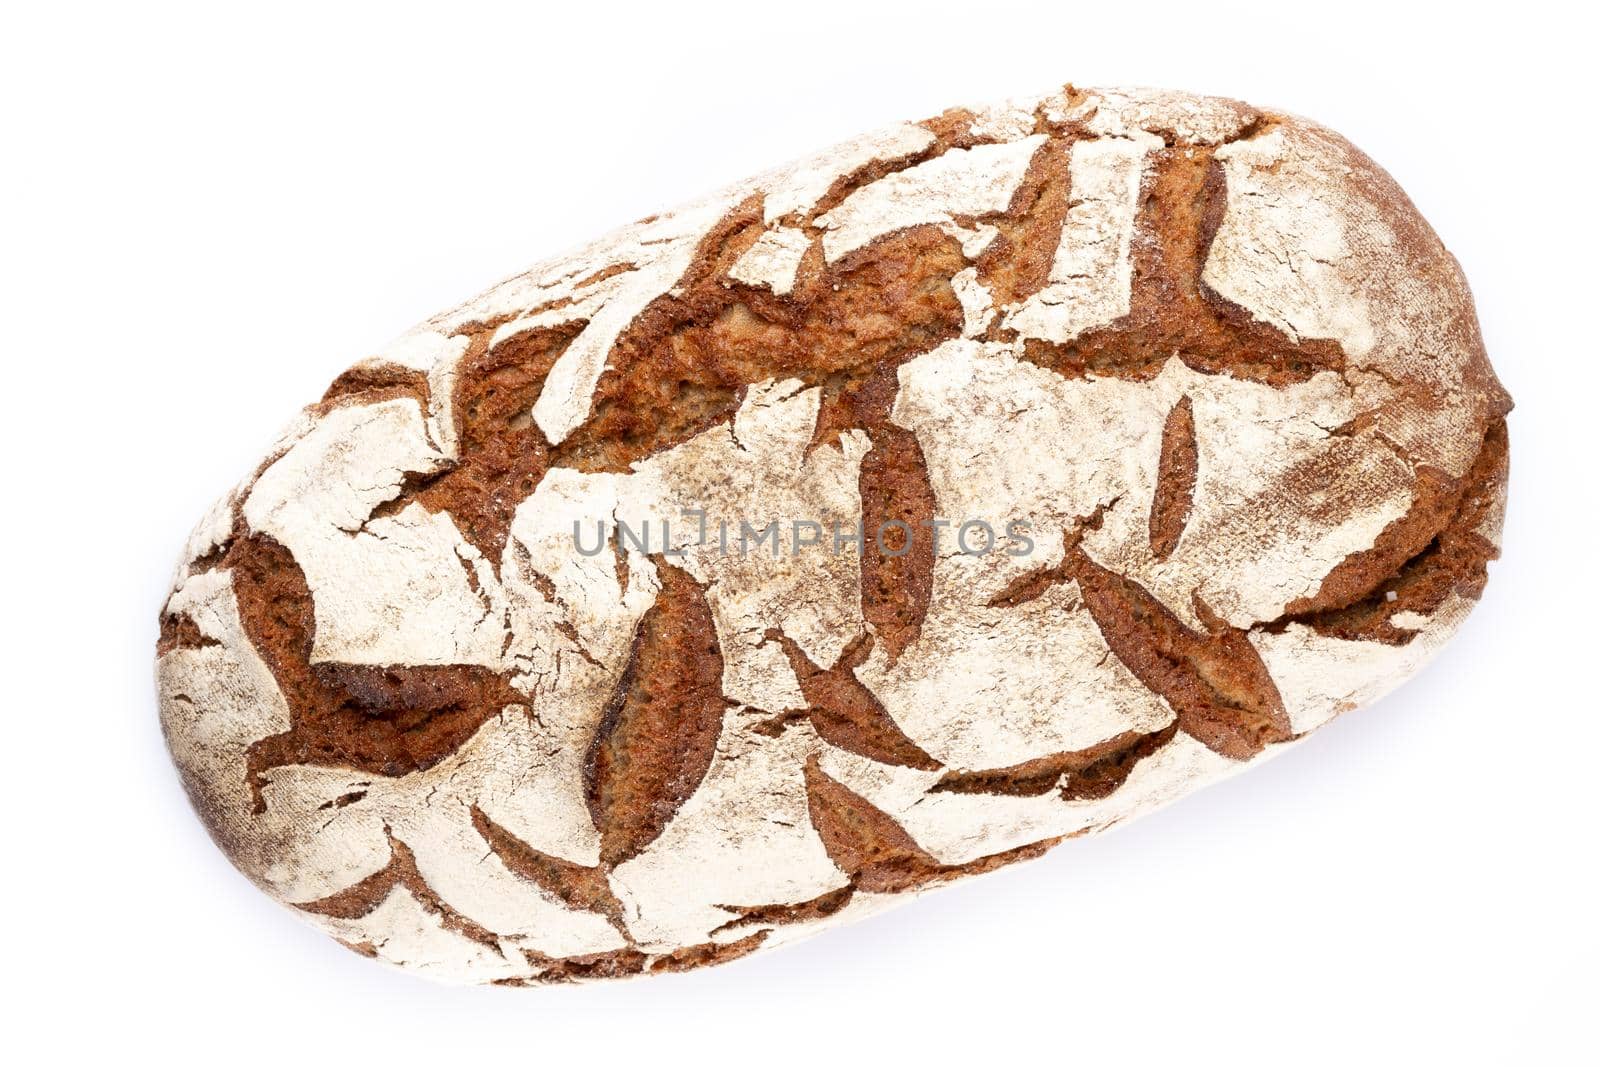 Rye bio breads on the white background.